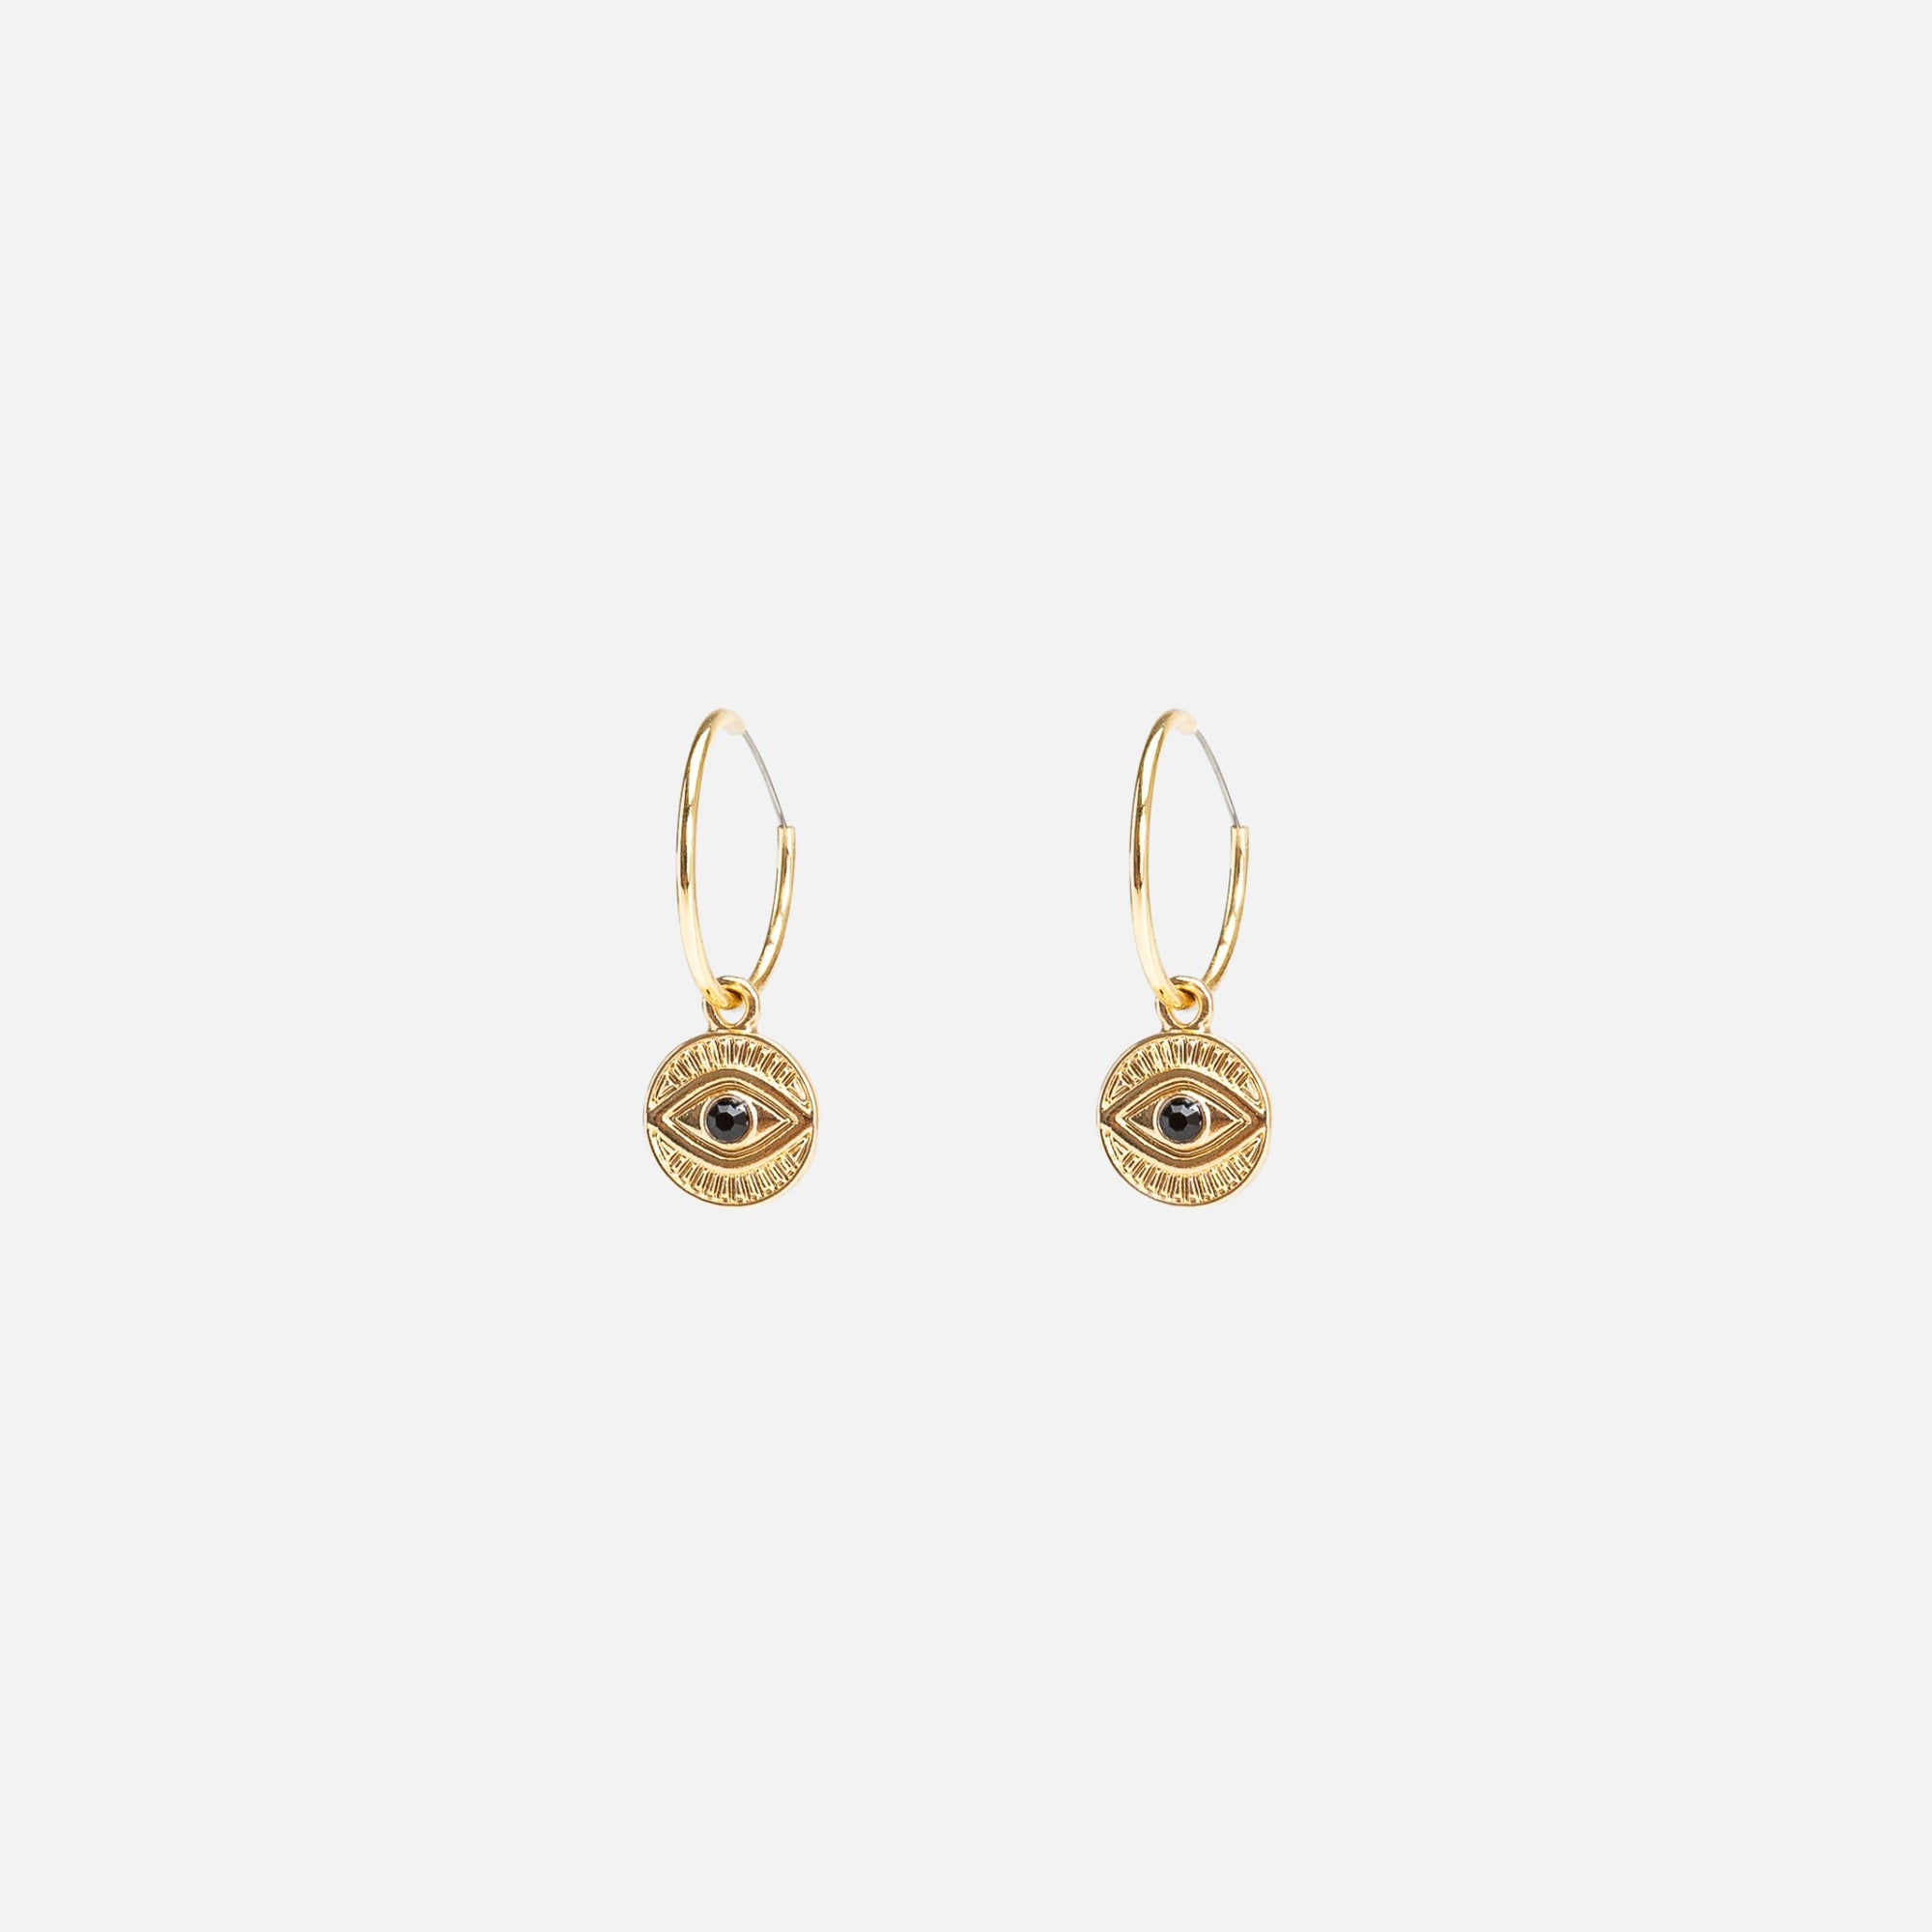 Golden hoop earrings with eye charm